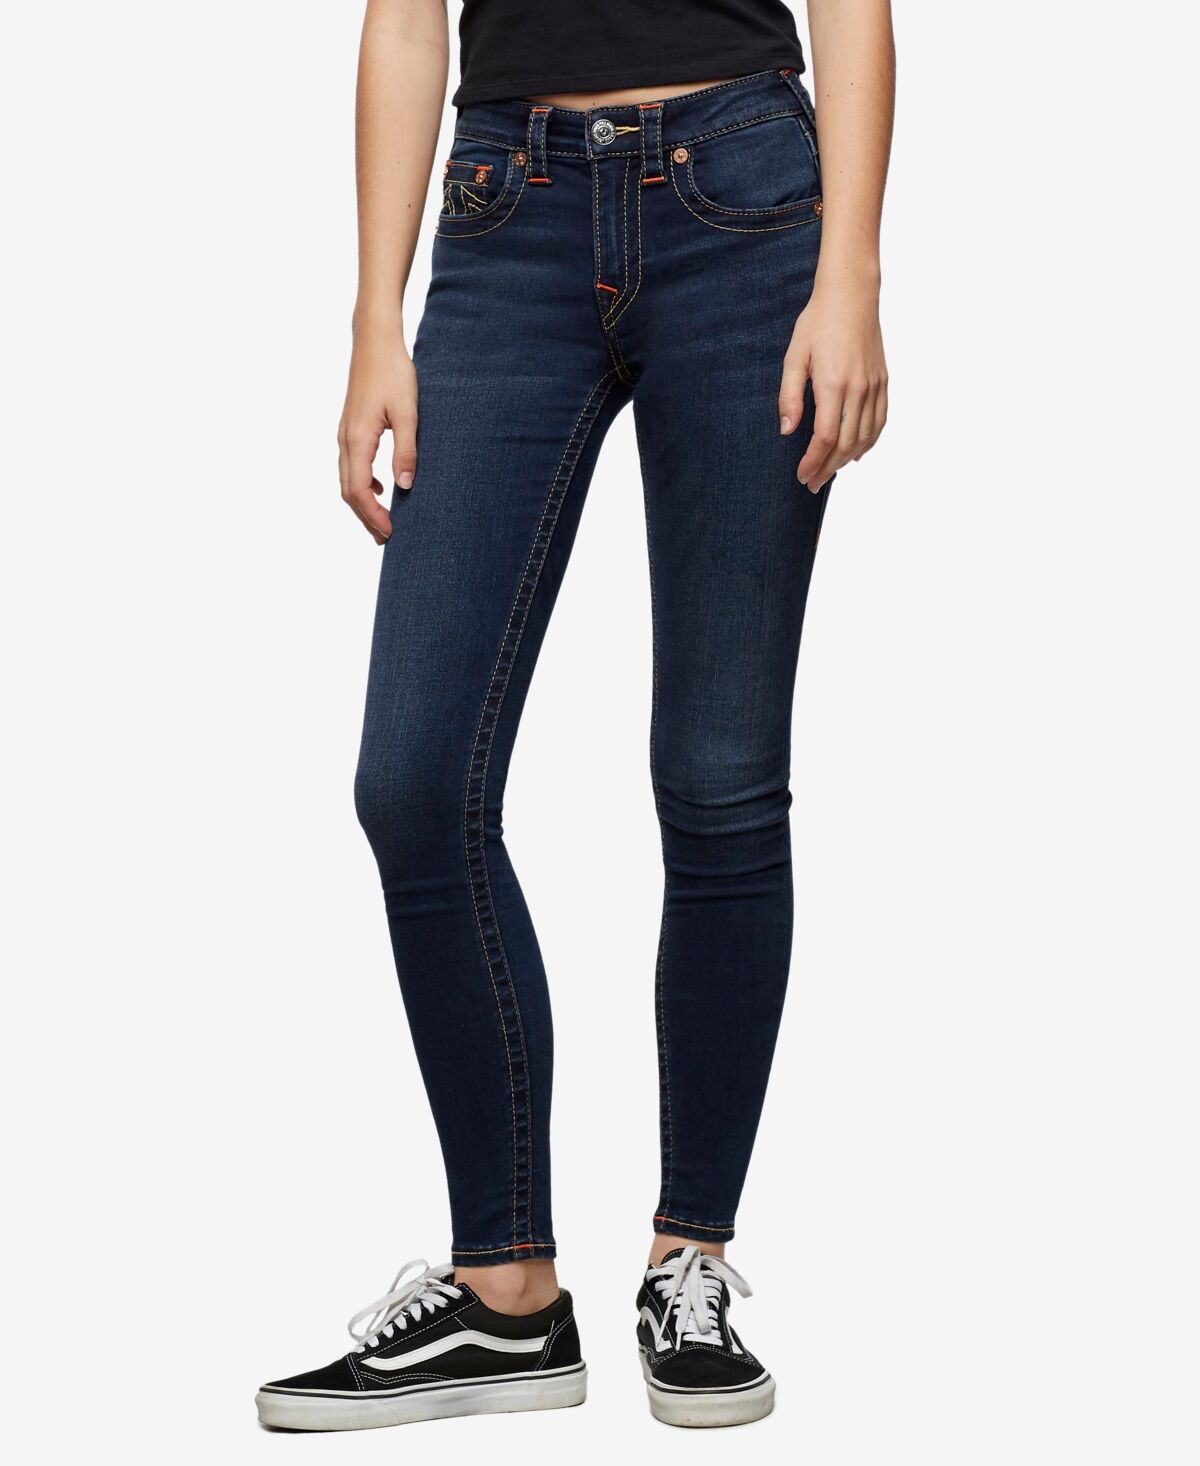 True Religion Women's Jennie Curvy Mid Rise Skinny Jeans - Indigo Upgrade